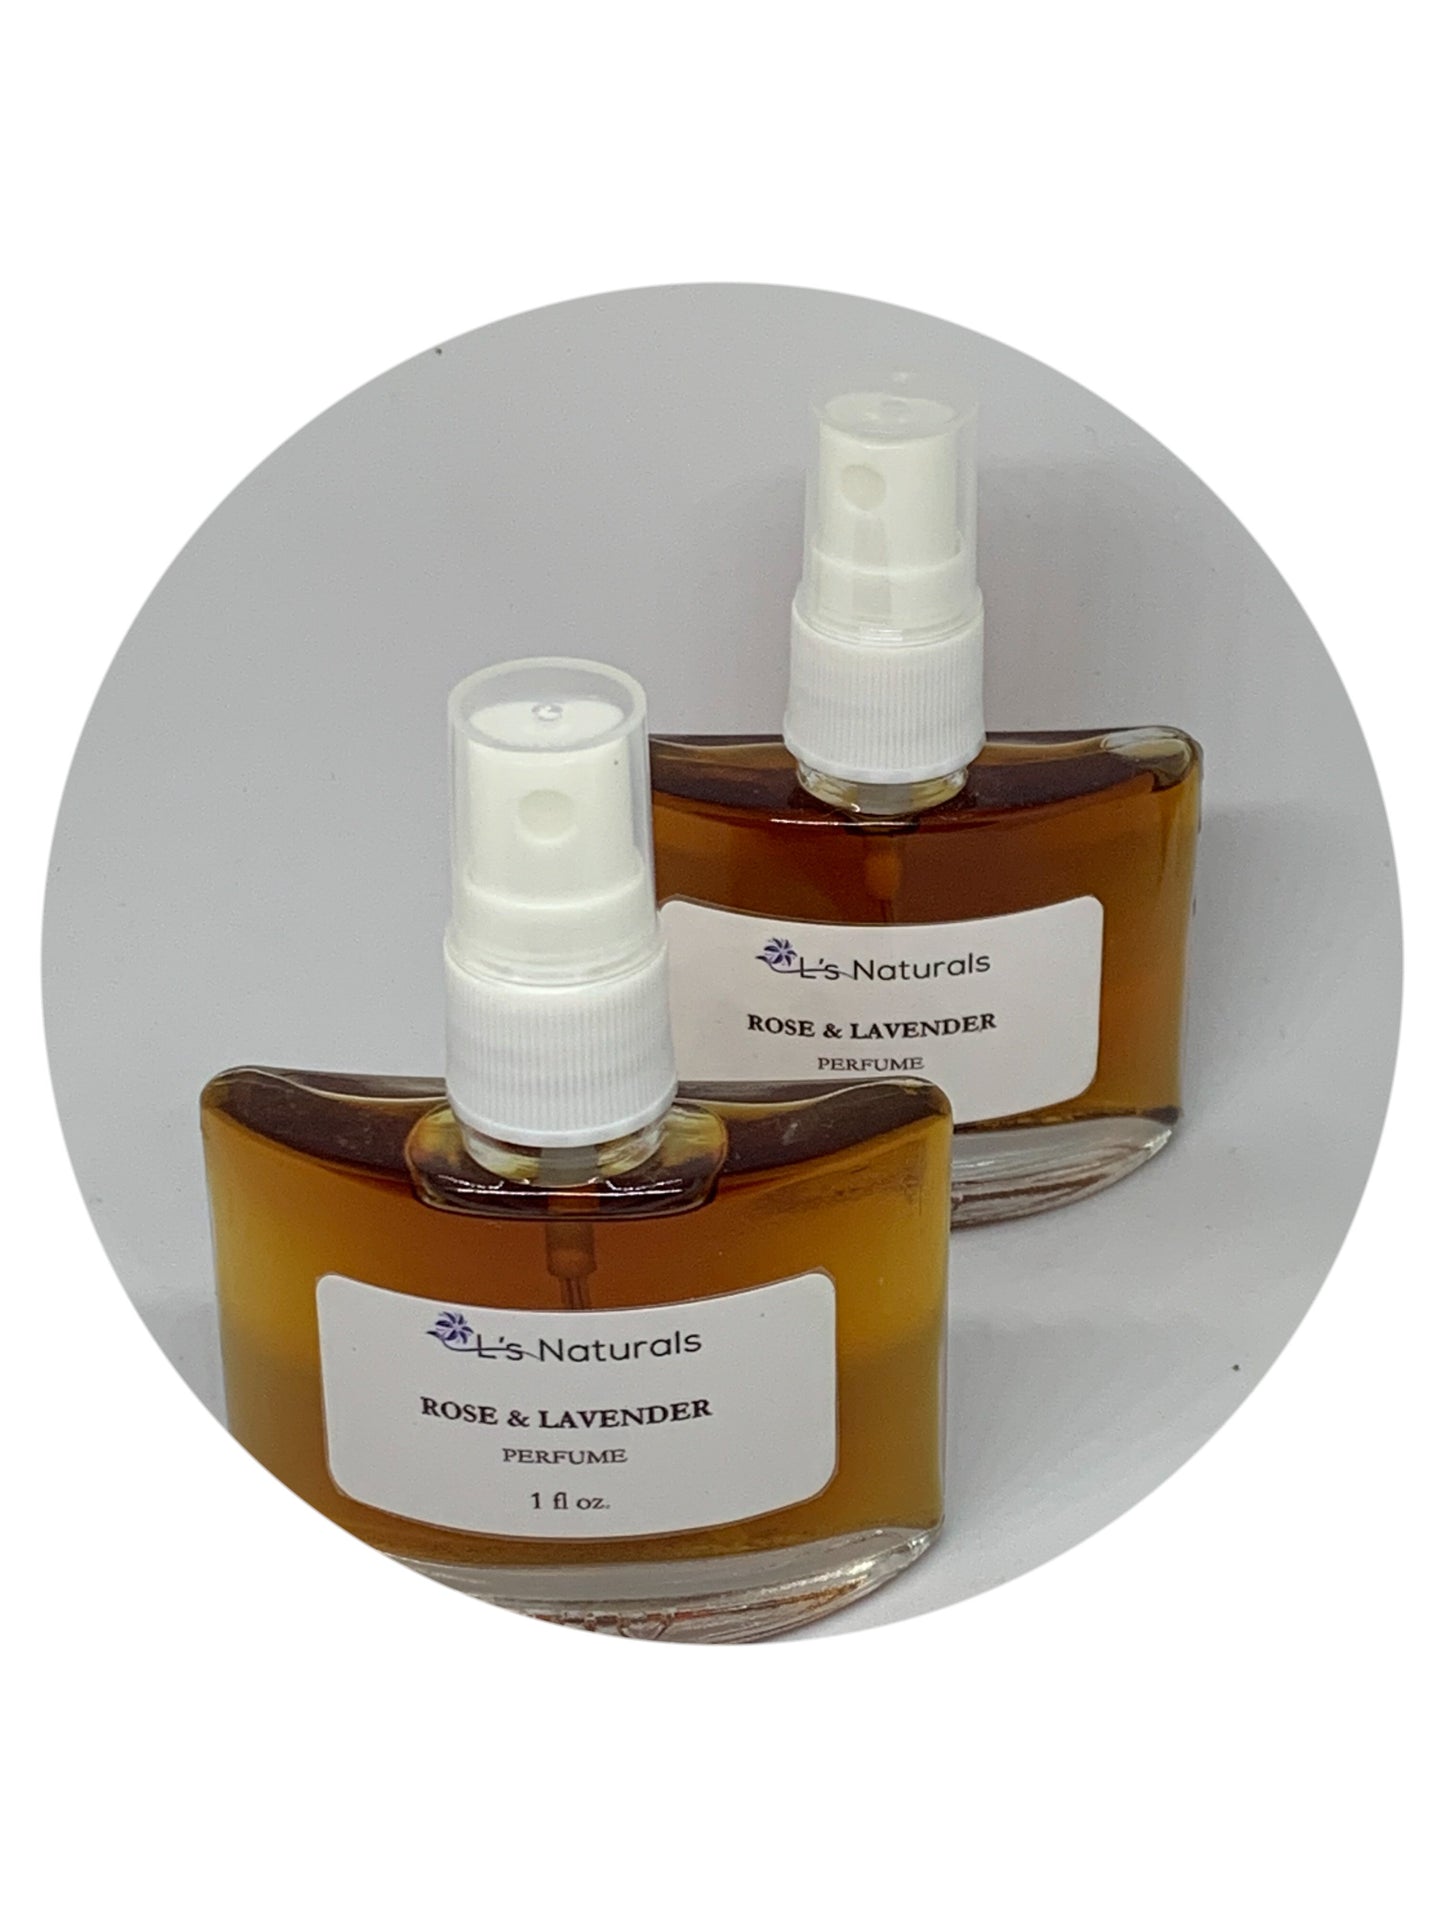 Rose and Lavender Perfume (2014) - L's Naturals | Bath & Body Boutique